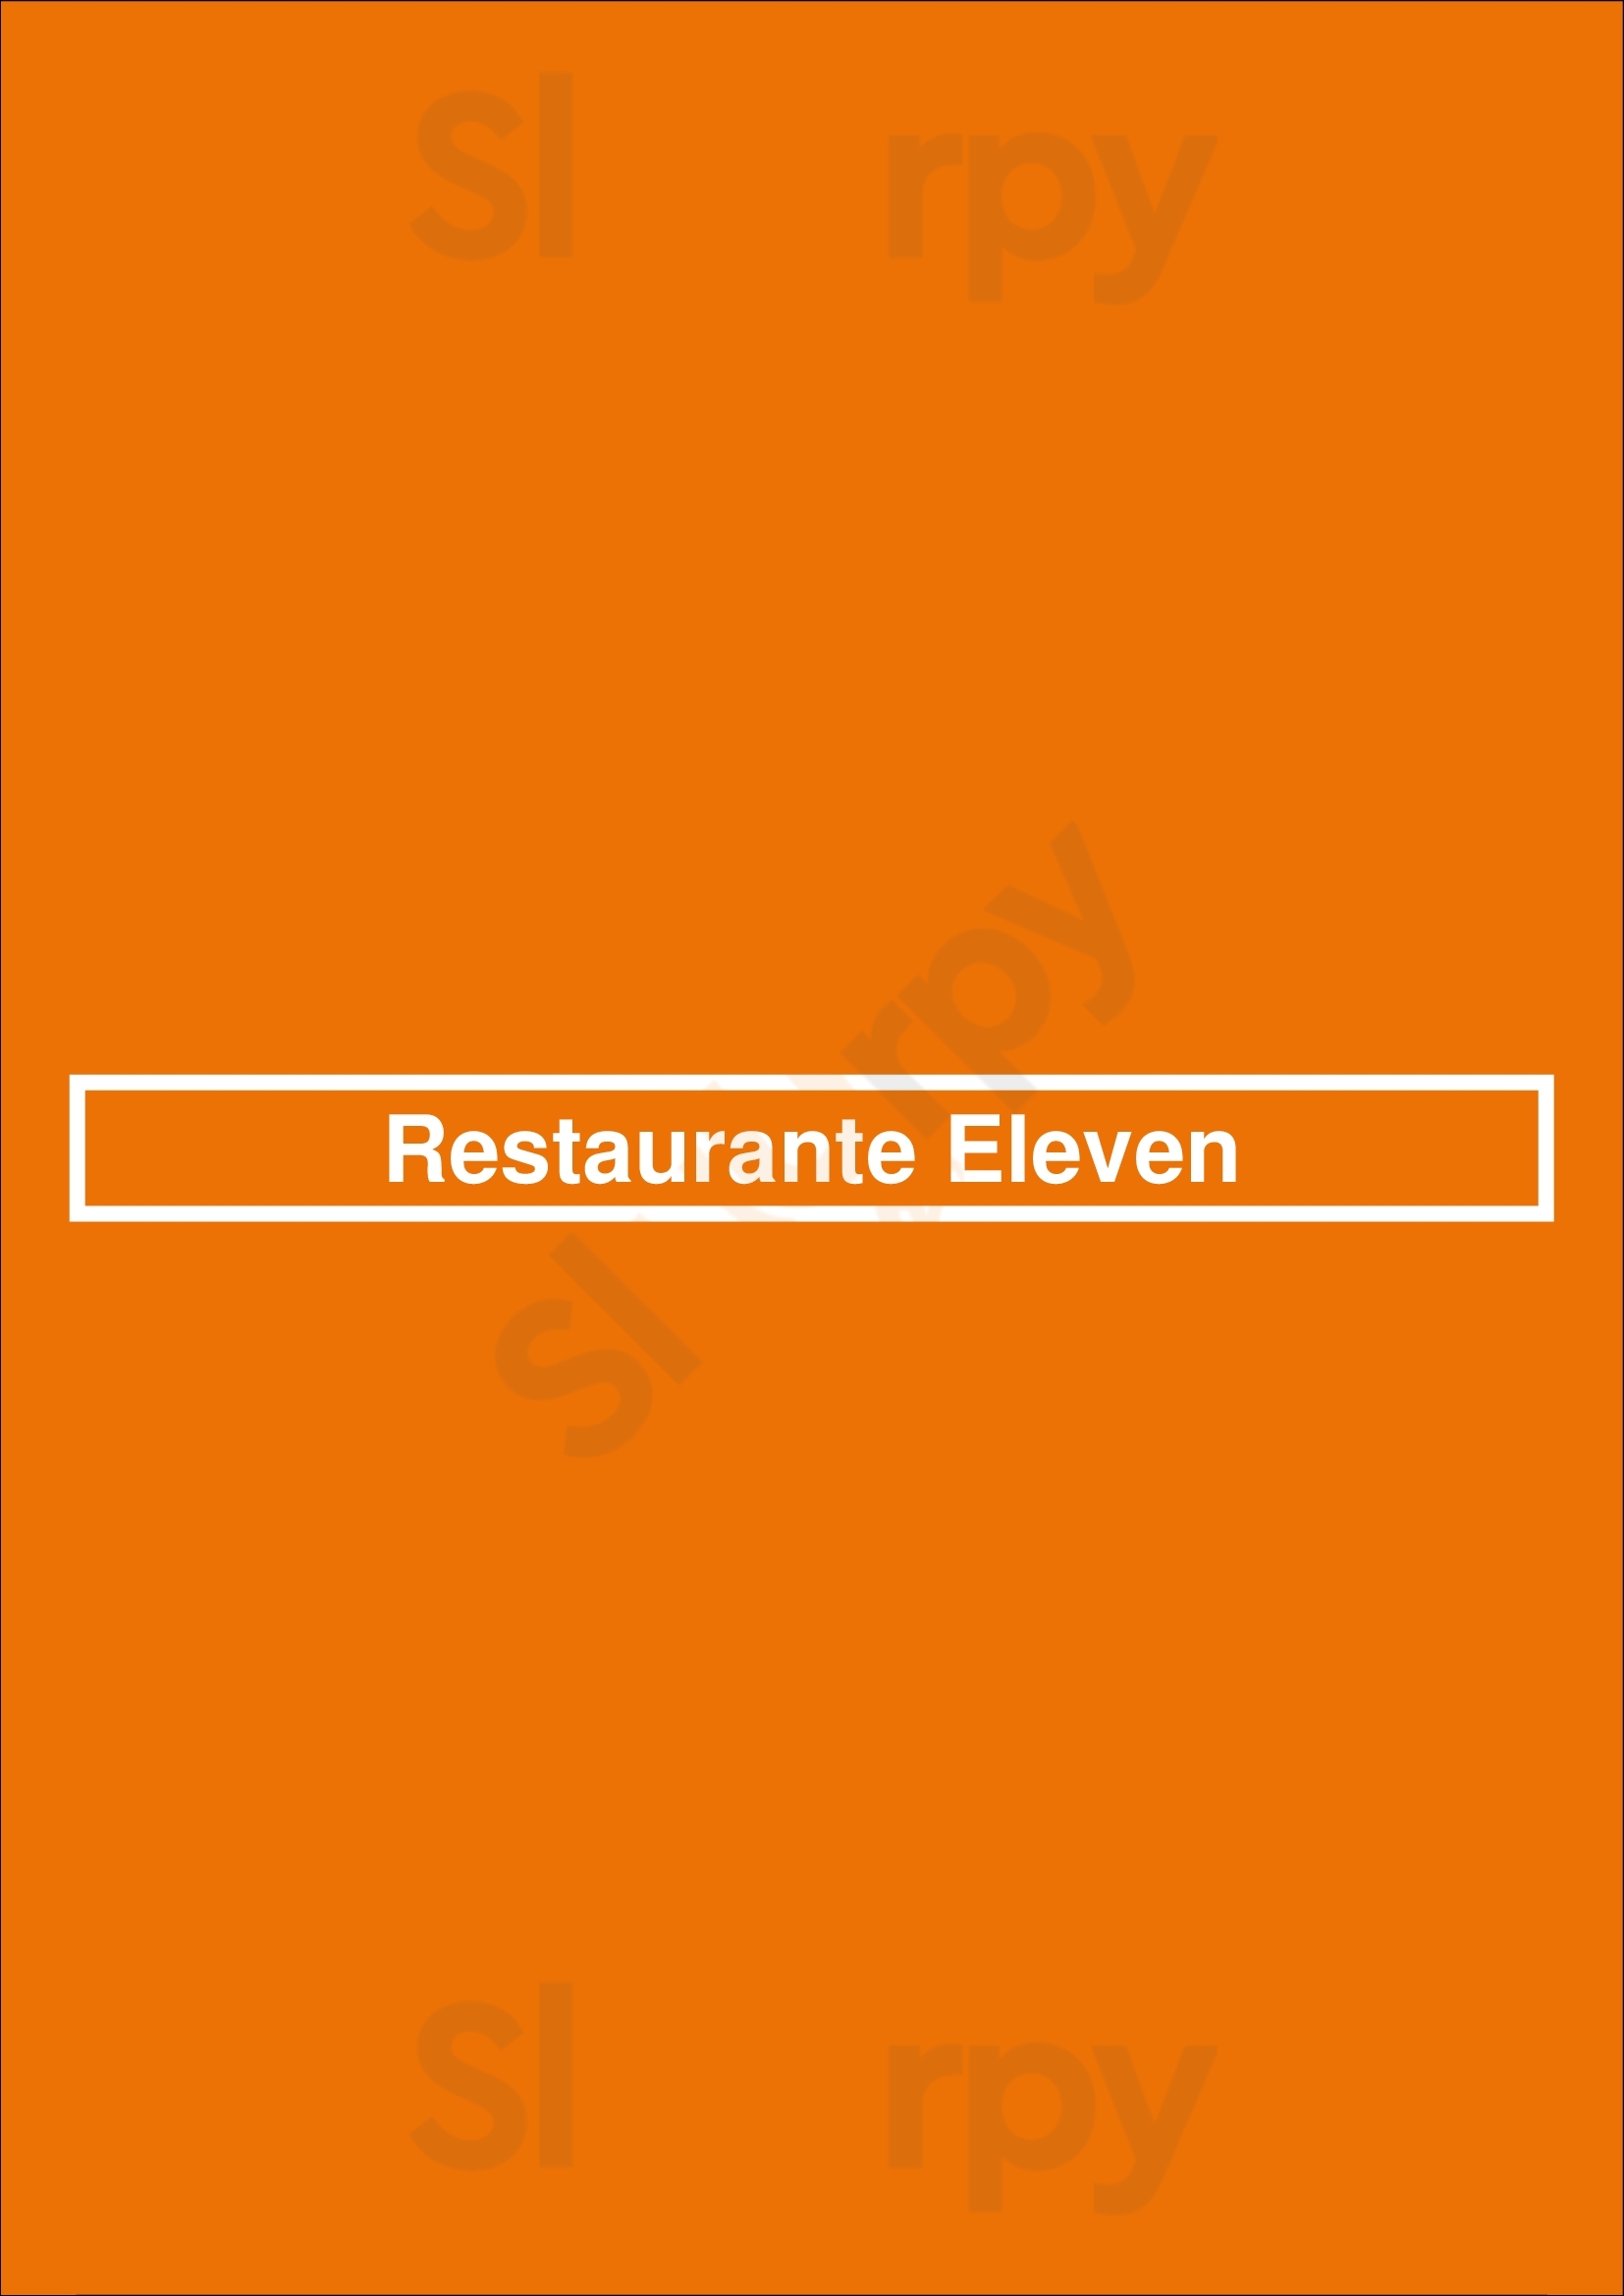 Restaurante Eleven Lisboa Menu - 1